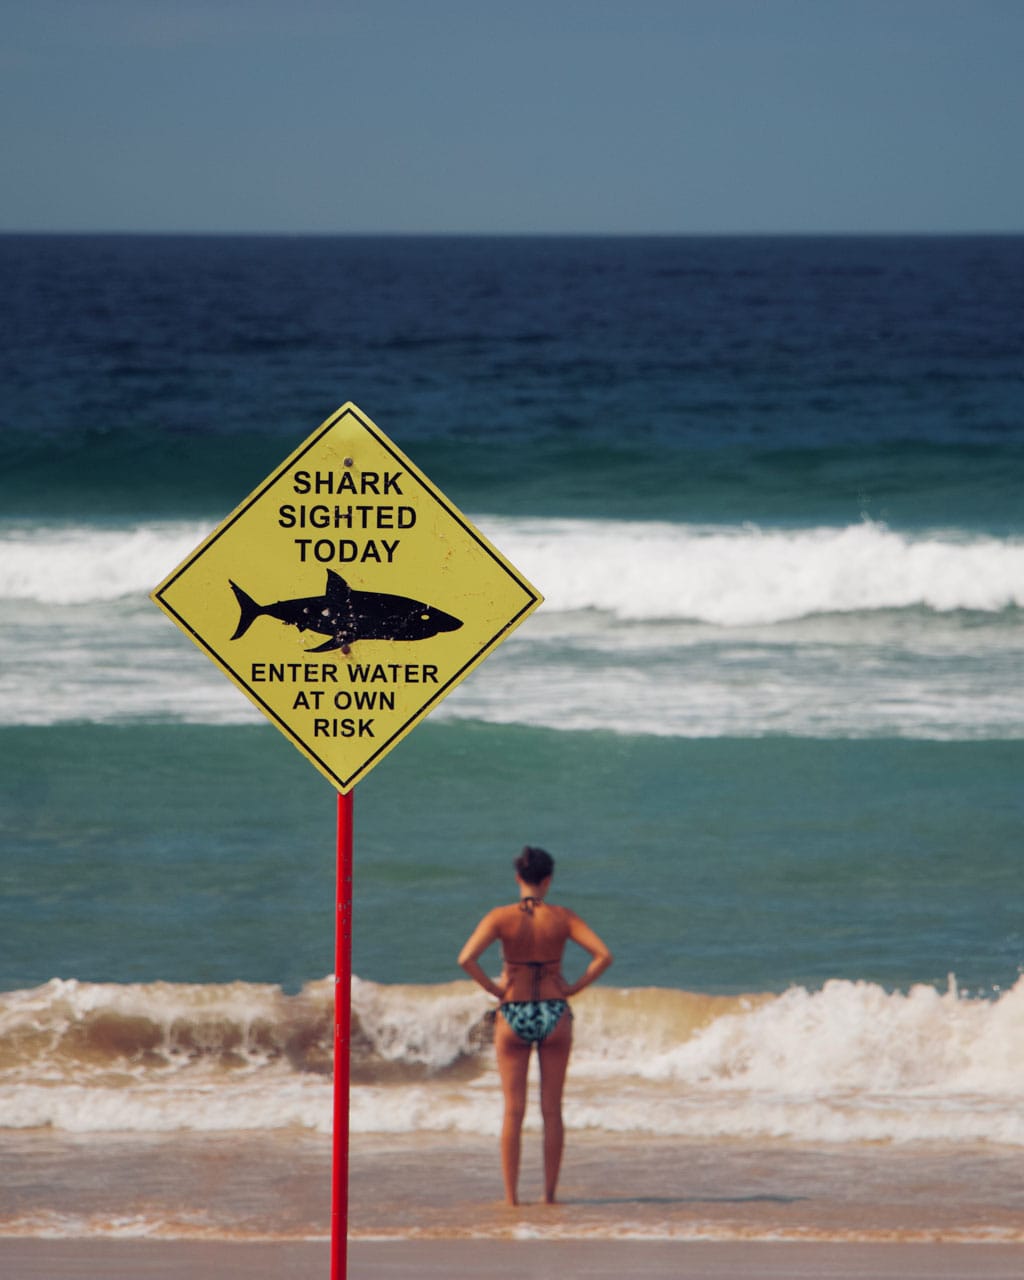 Shark warning sign on beach